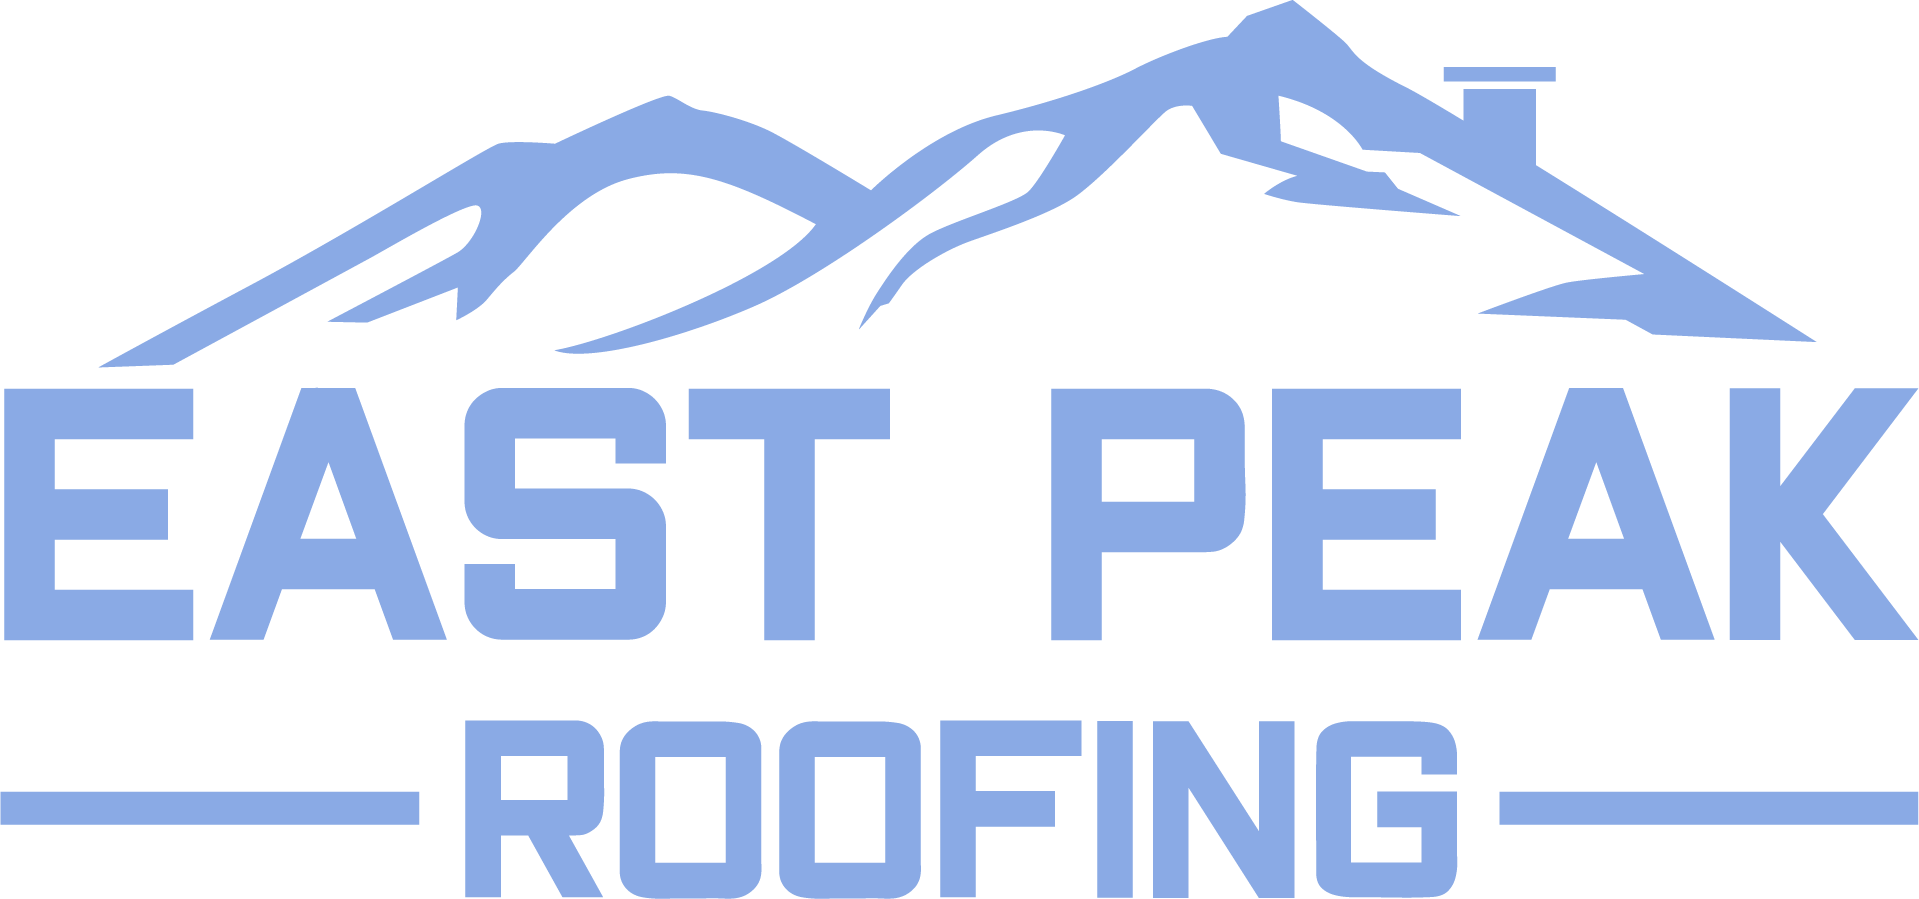 East Peak Roofing